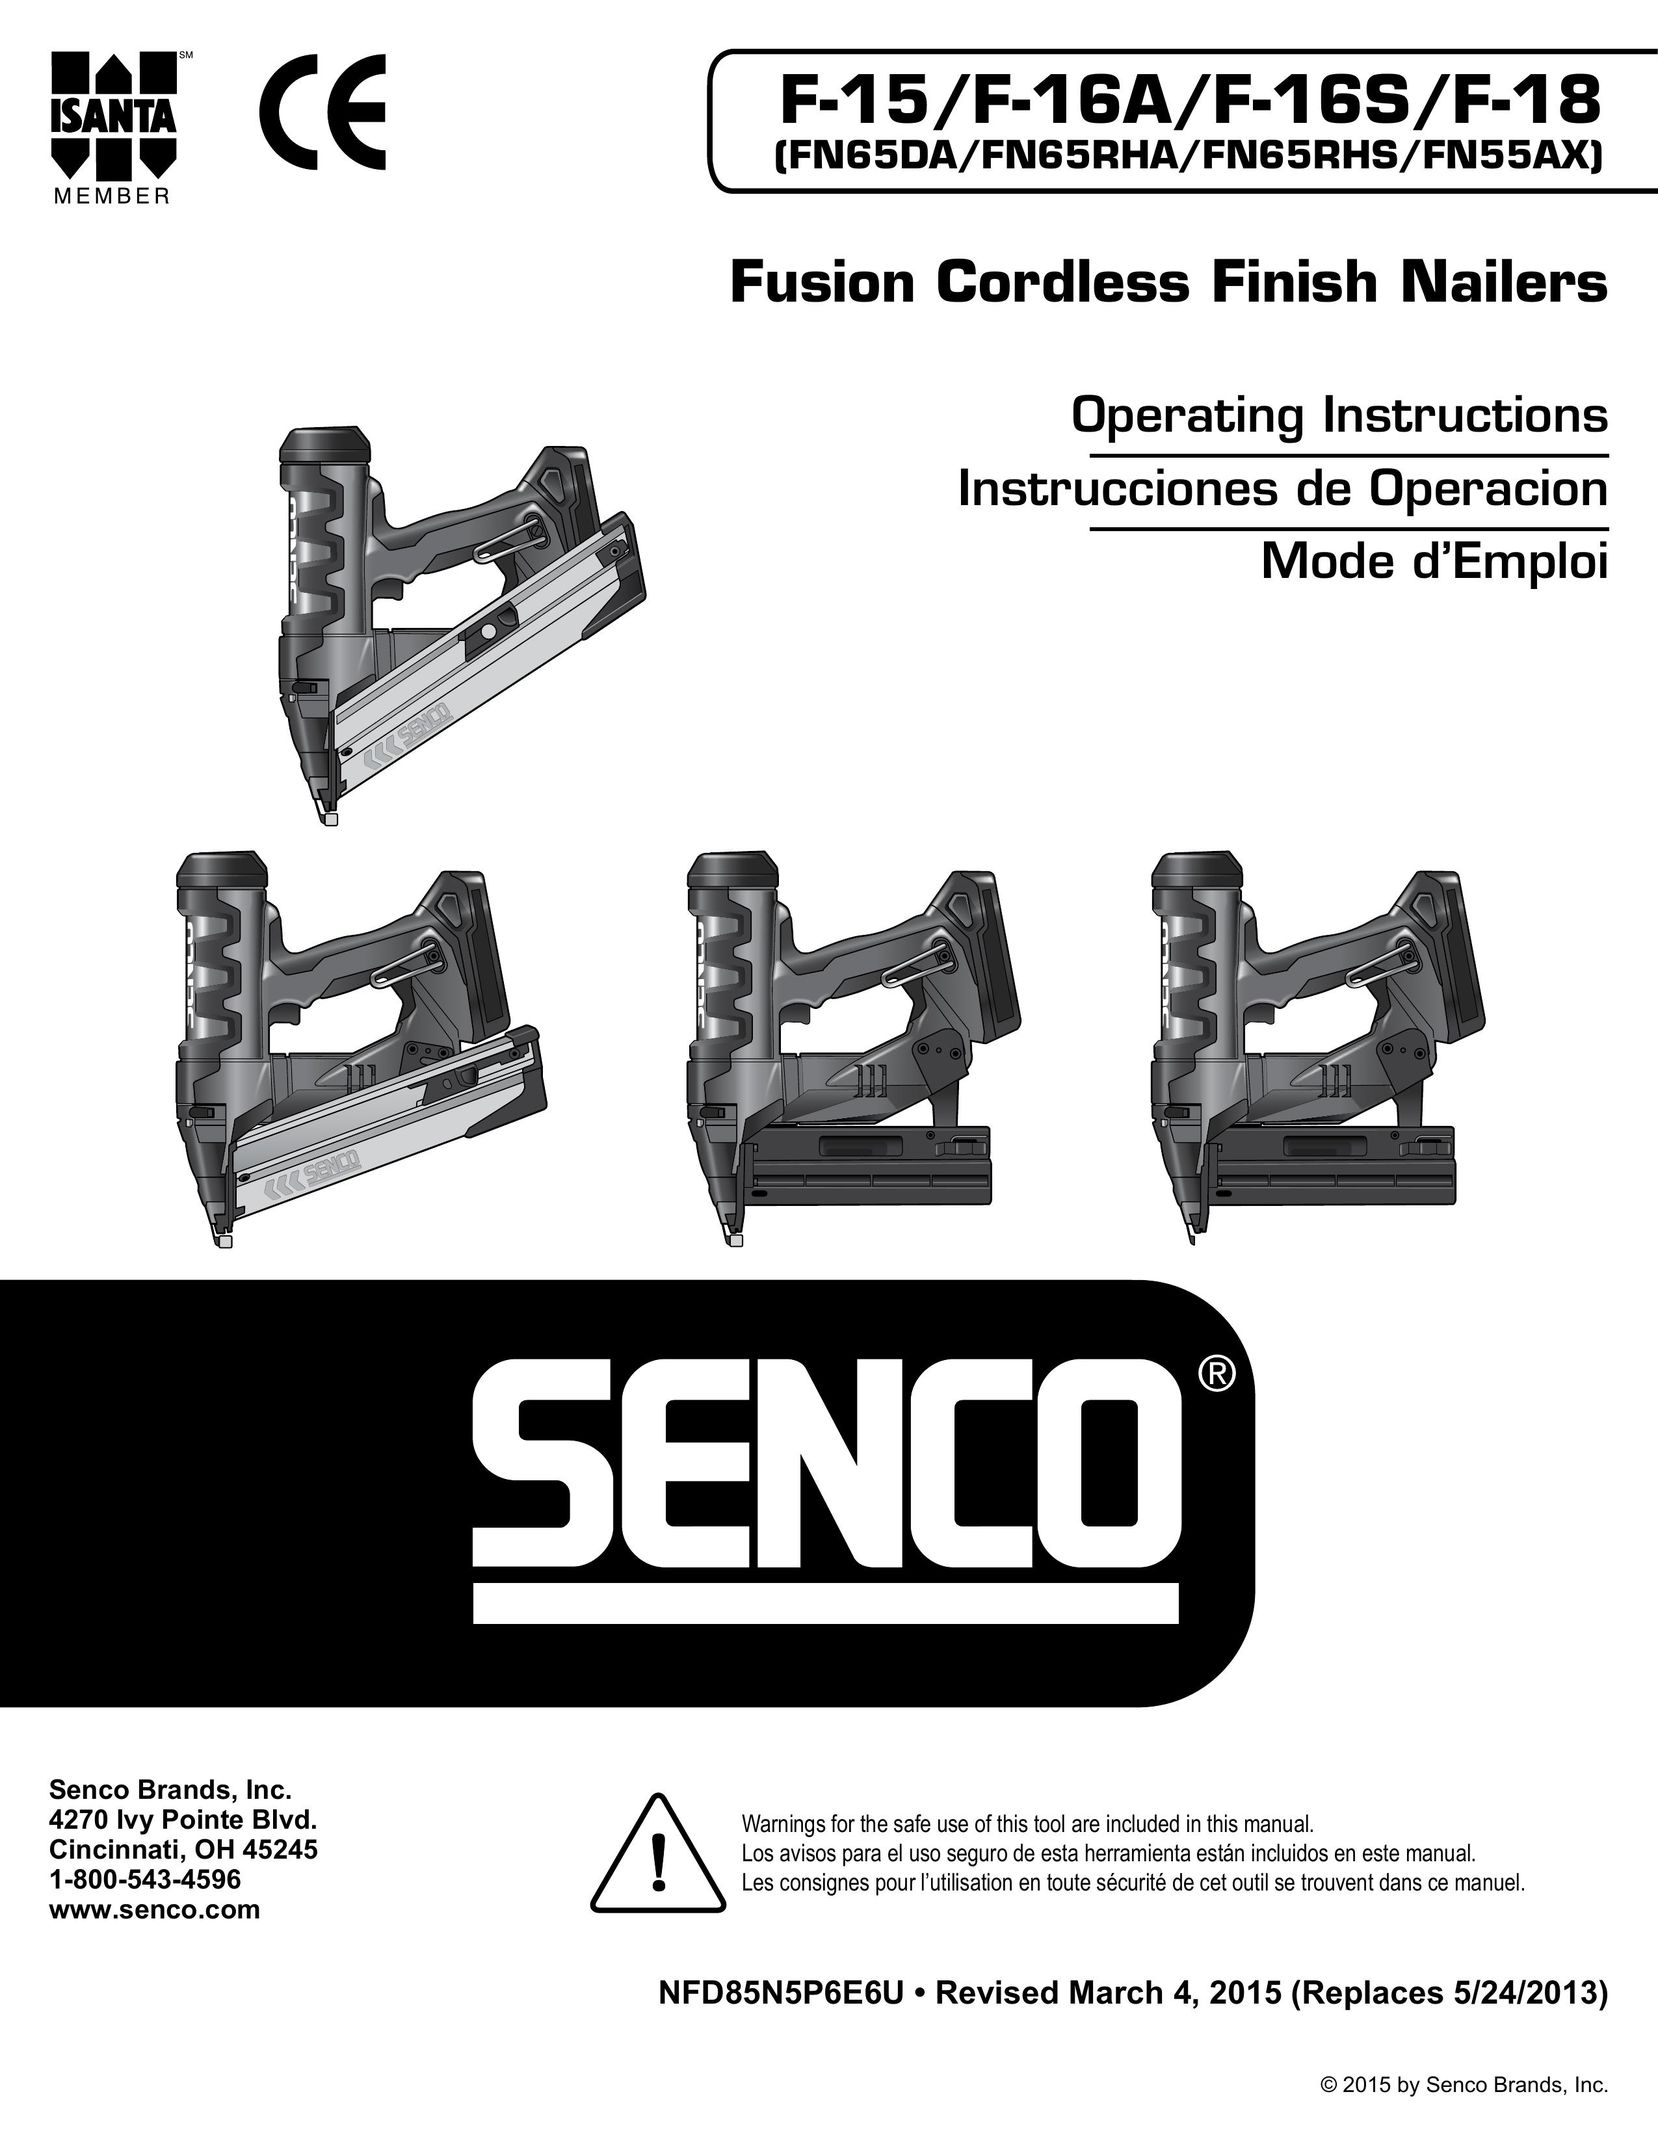 Senco FN55AX Nail Gun User Manual